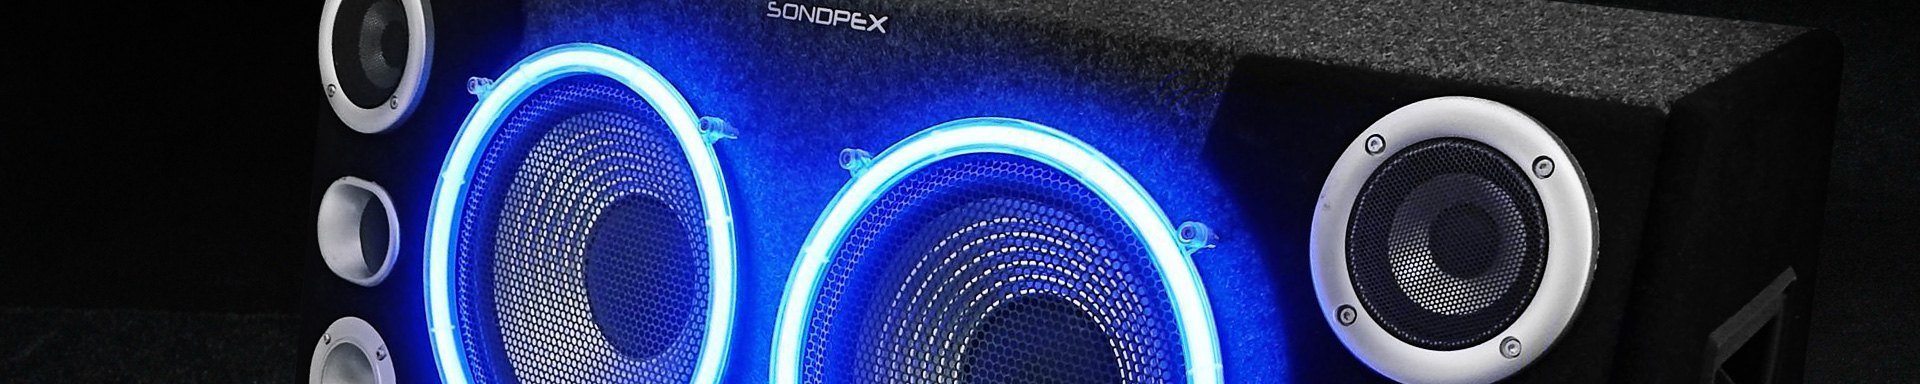 Sondpex Amplifiers